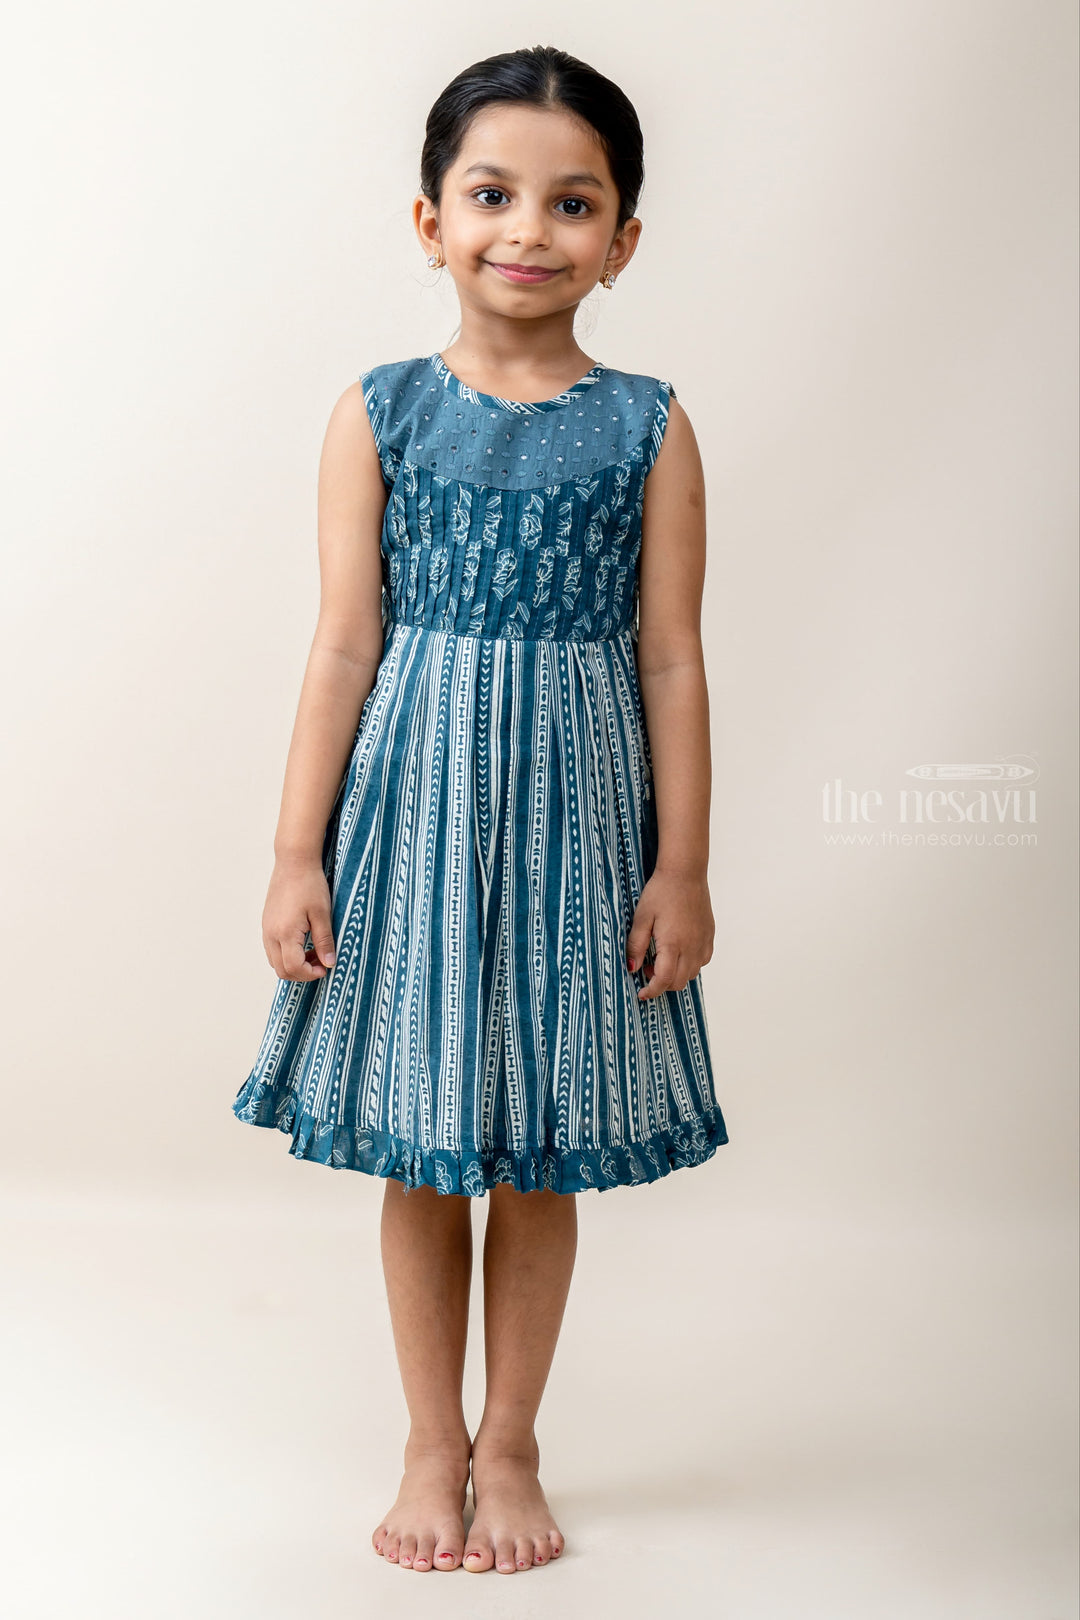 The Nesavu Frocks & Dresses Navy Blue Soft Cotton Comfy Collection For Baby Girls With Pockets psr silks Nesavu 14 (6M) / gray GFC942B